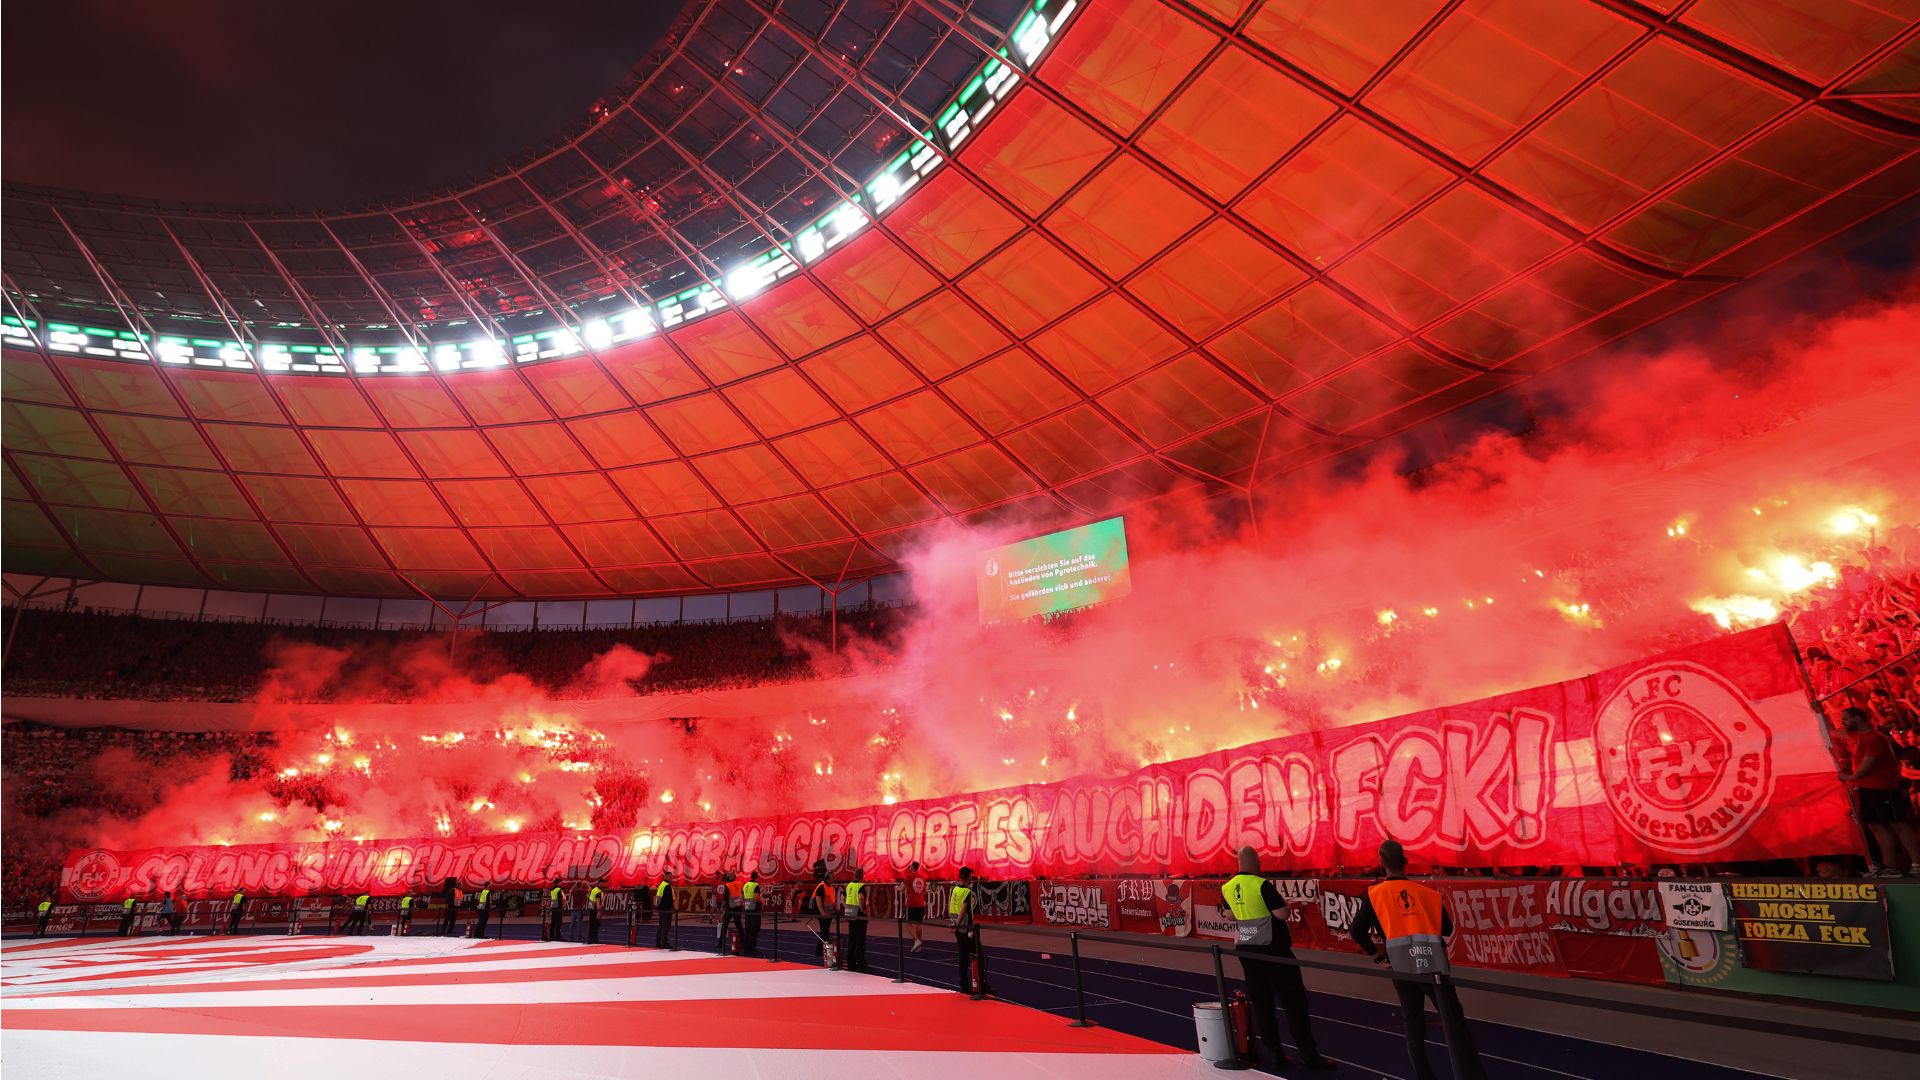 Festa da torcida do Kaiserslautern durante a partida (Crédito: Getty Images)